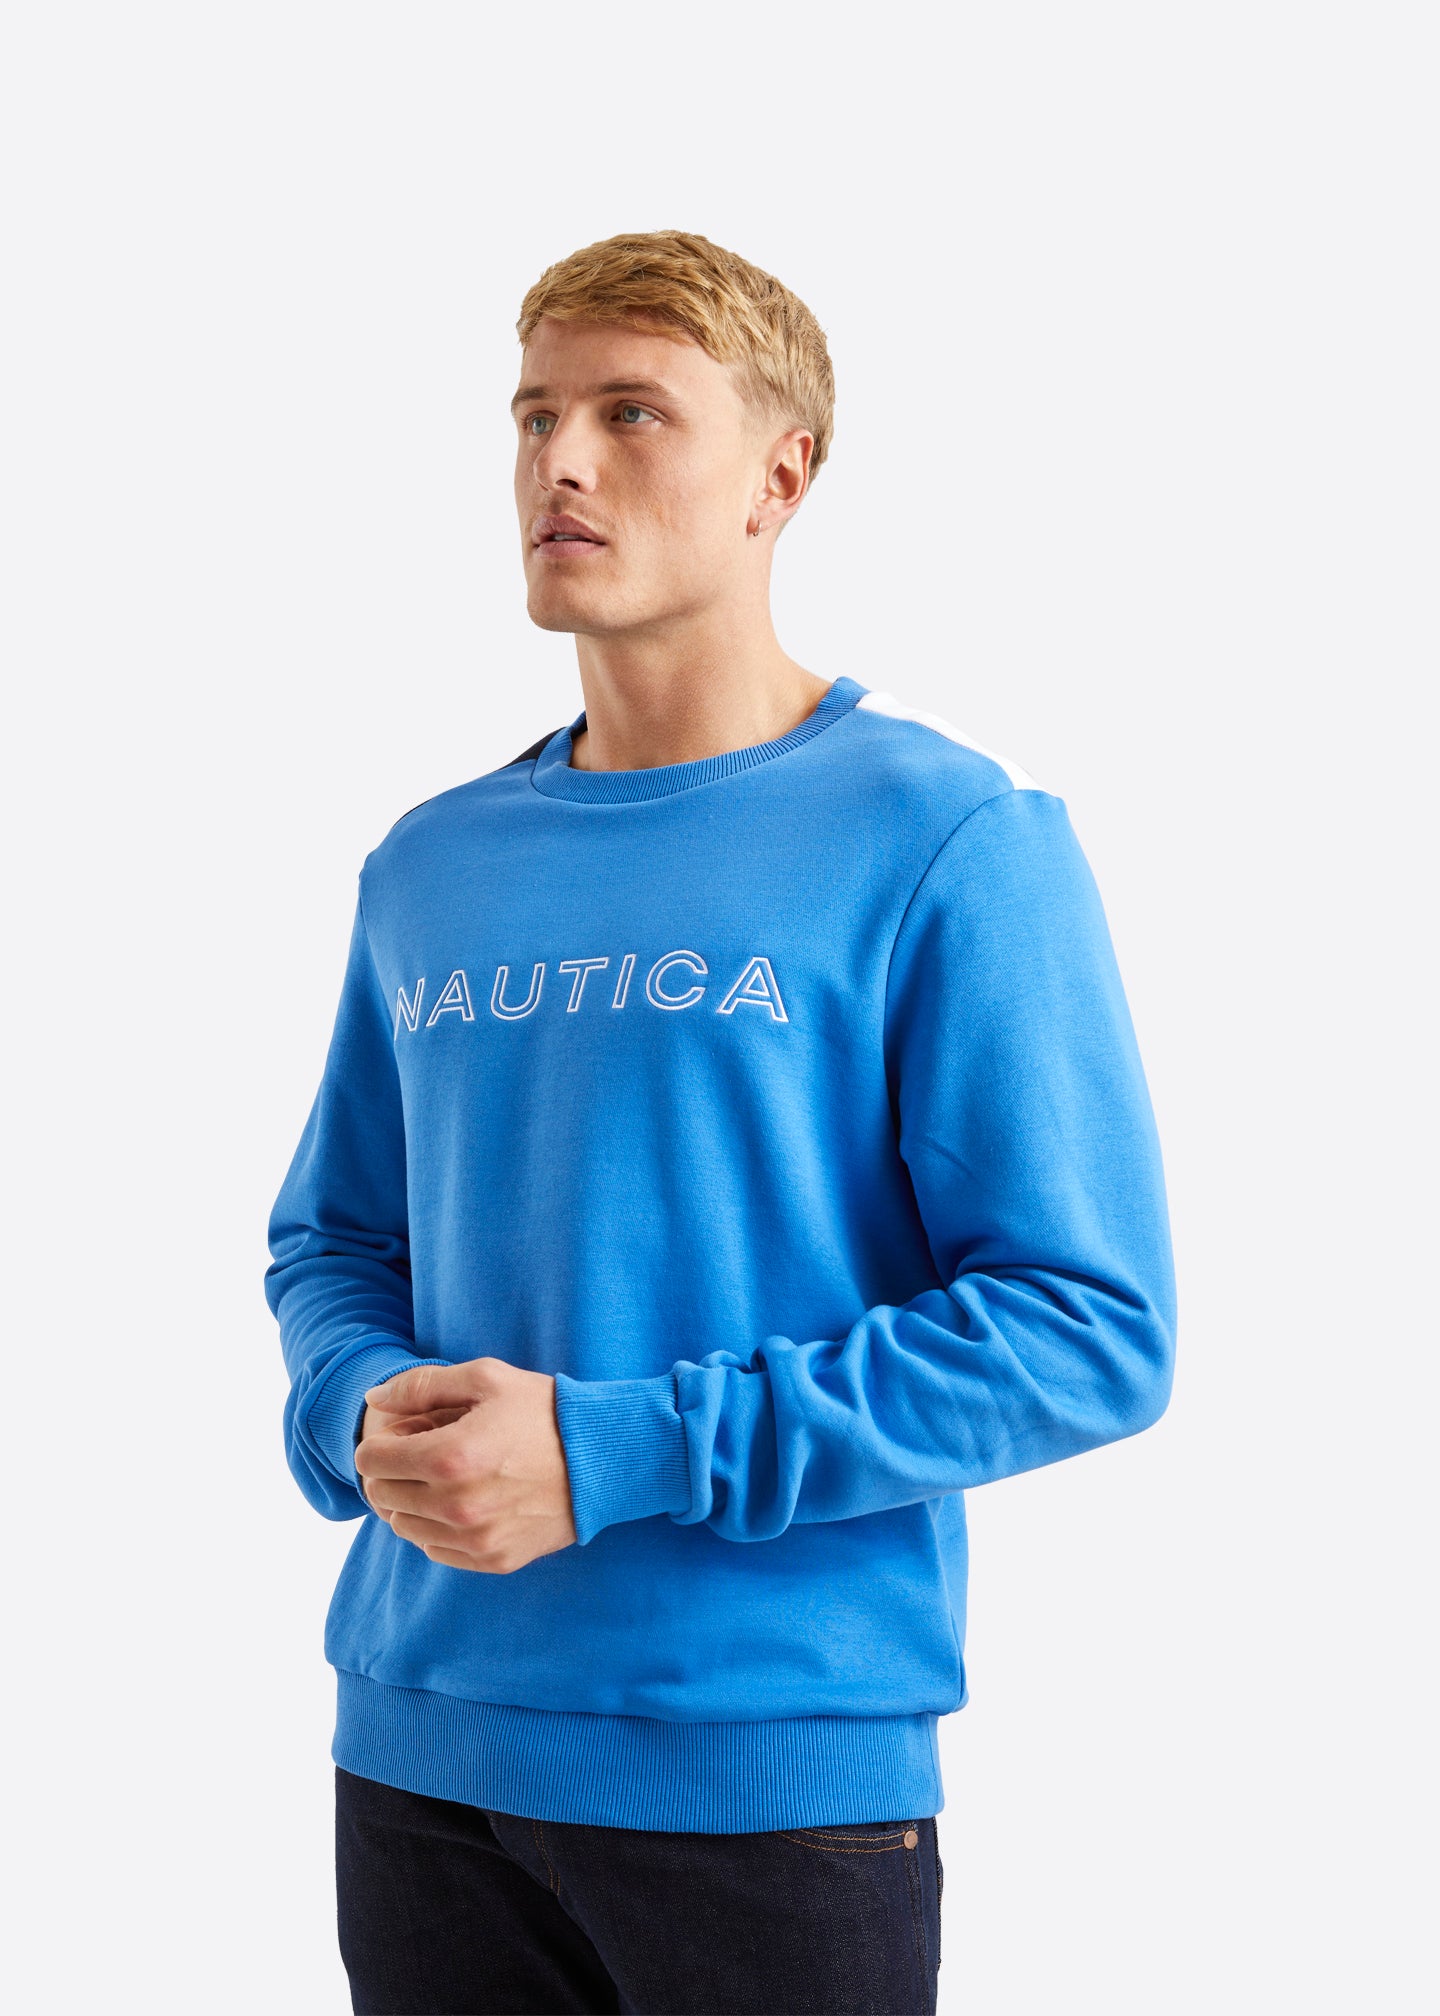 Nautica Madden Sweatshirt - Blue - Front